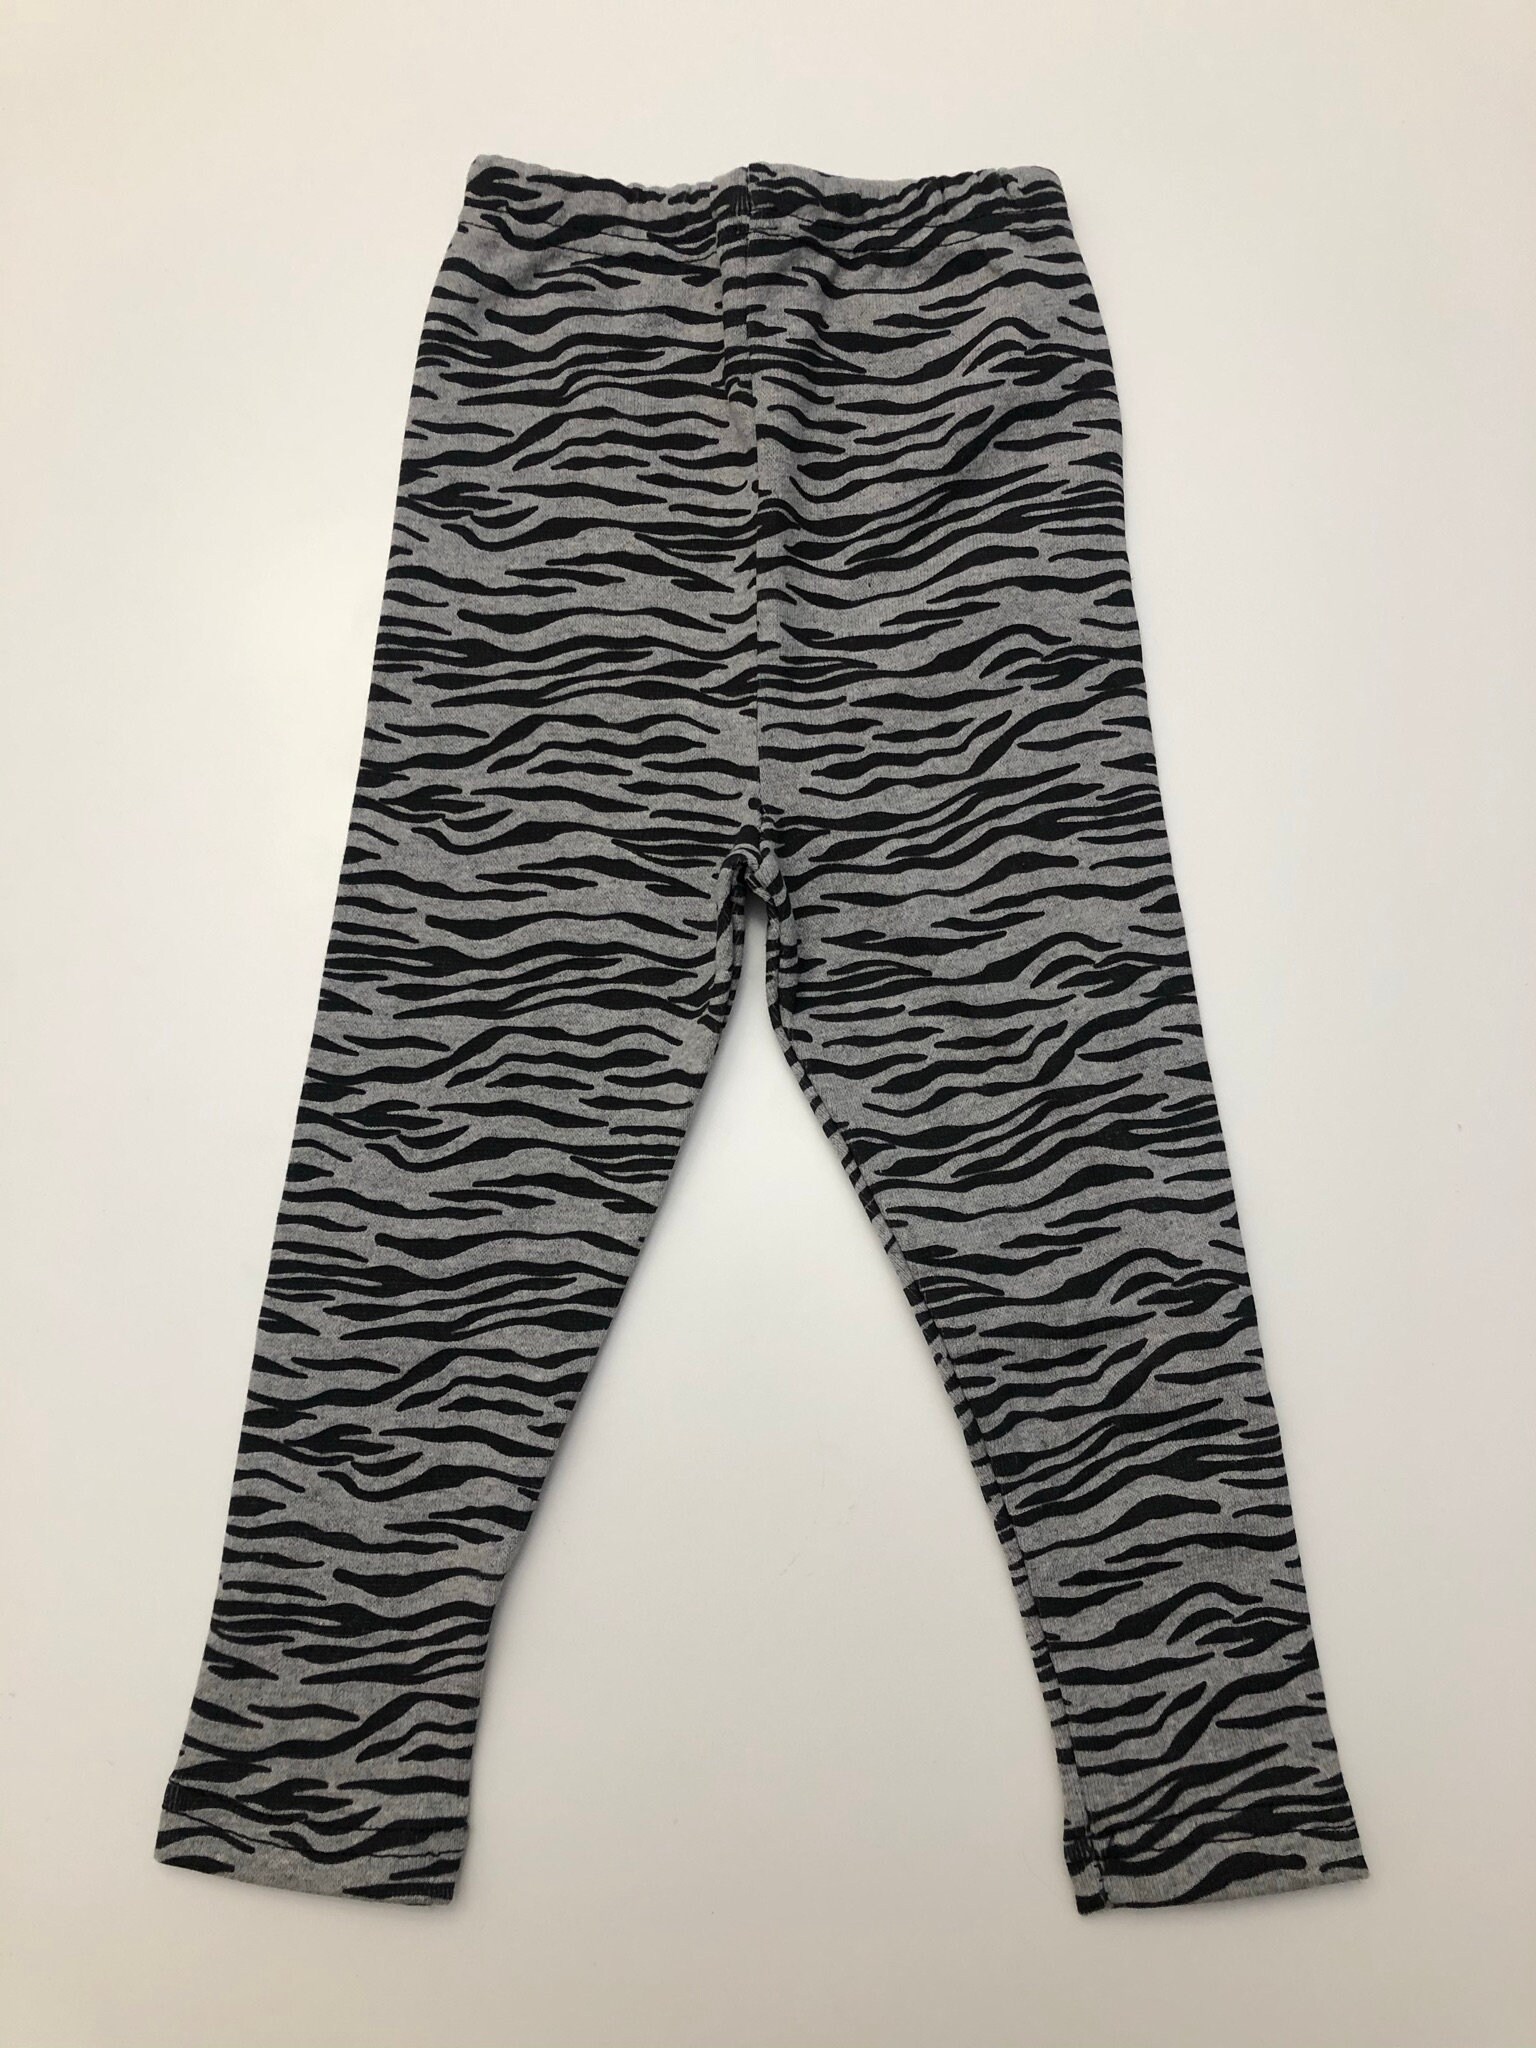 High Waist Warm Girl's Leggings Pants Zebra Pattern Casual Wear Fine  Turkish Cotton for Toddler Baby Kids Girls 